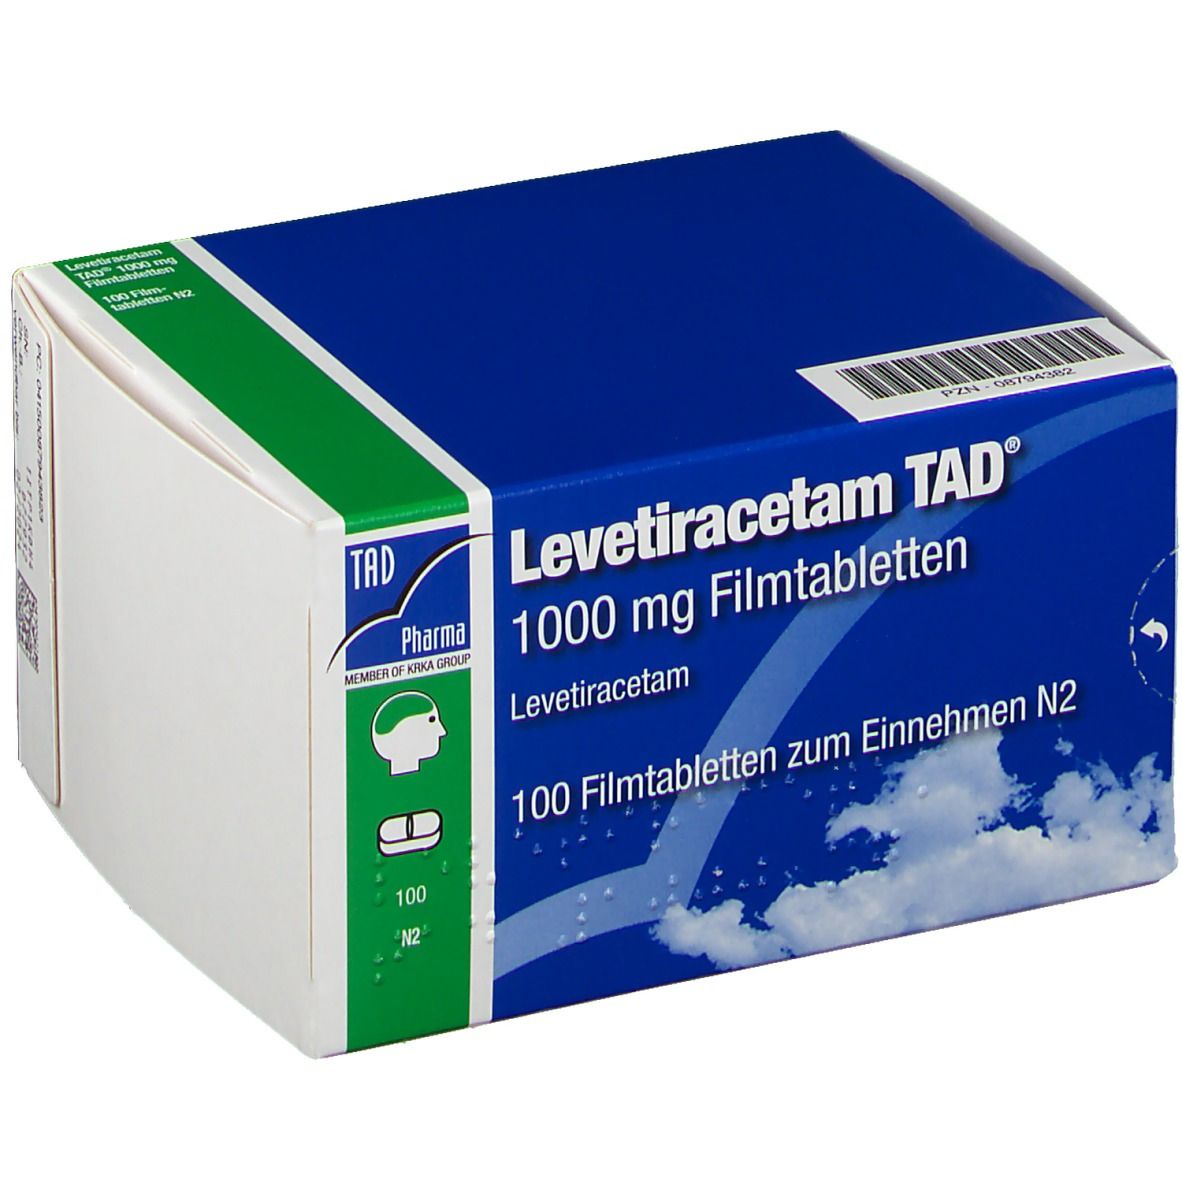 Levetiracetam TAD® 1000 mg